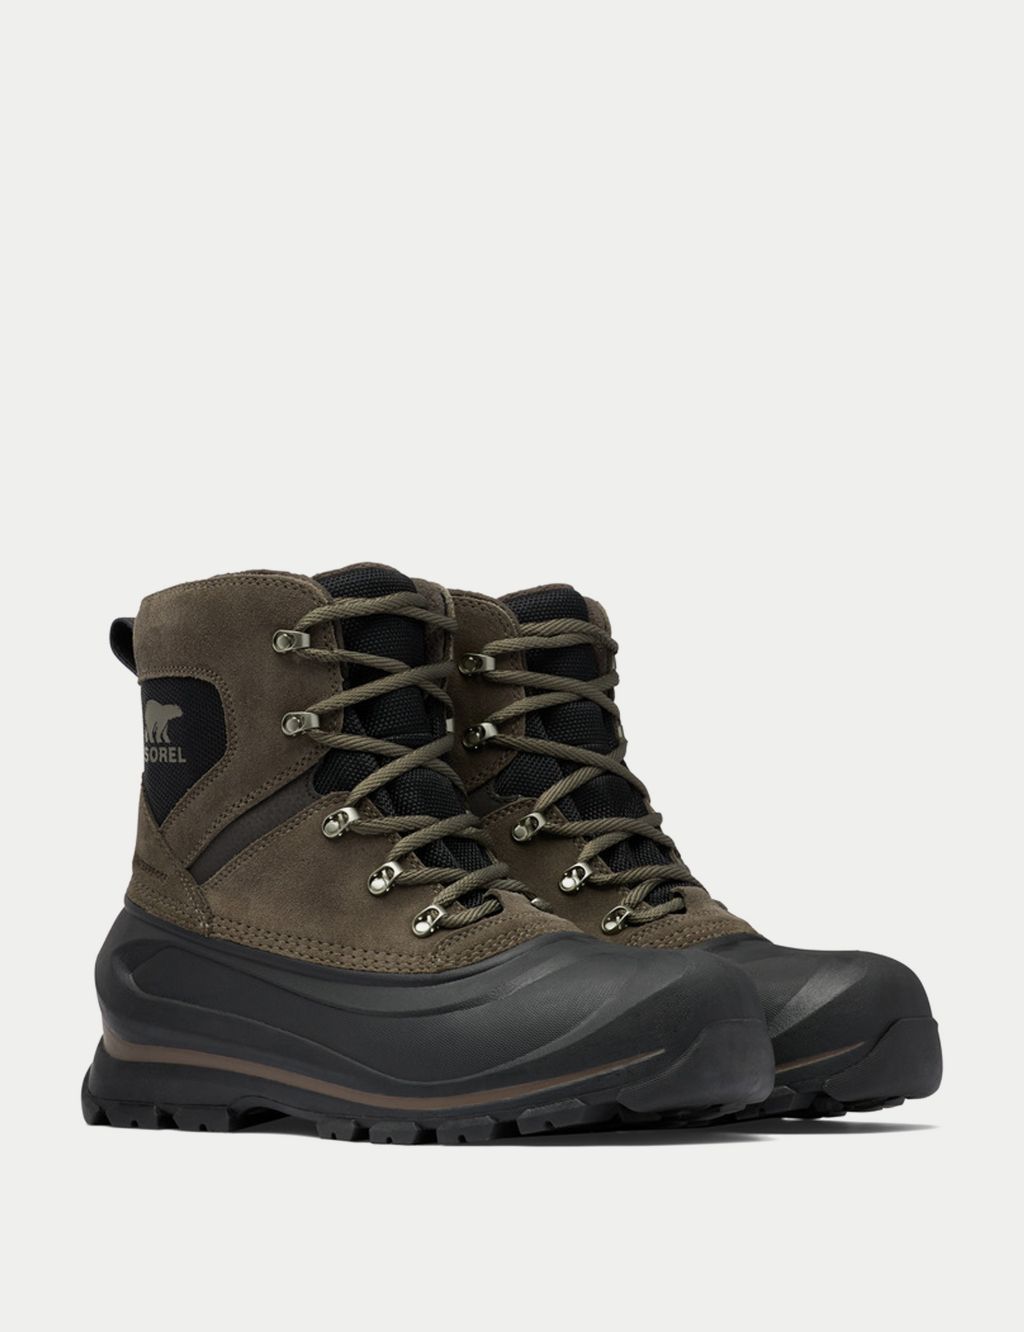 Buxton Leather Waterproof Walking Boots image 2